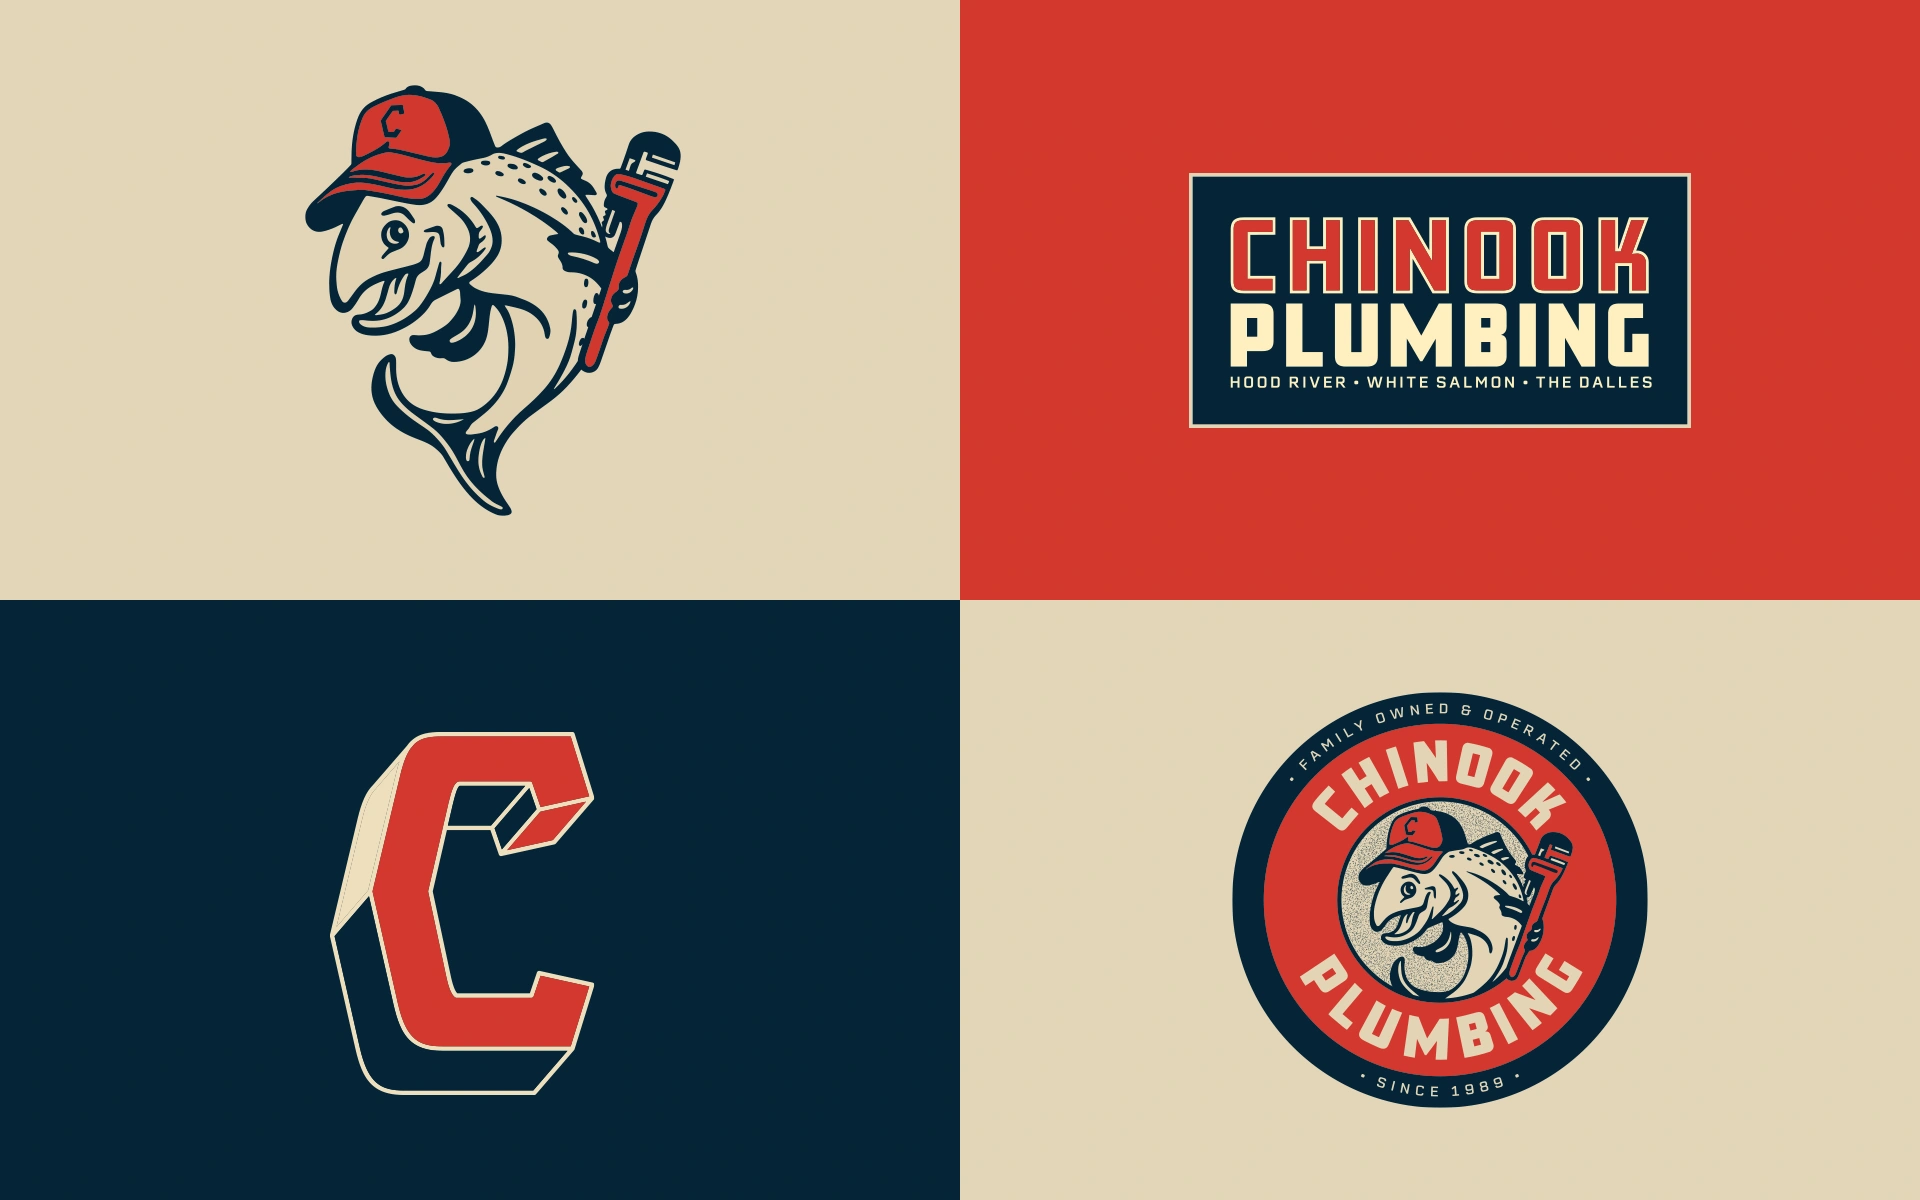 Chinook Plumbing branding elements